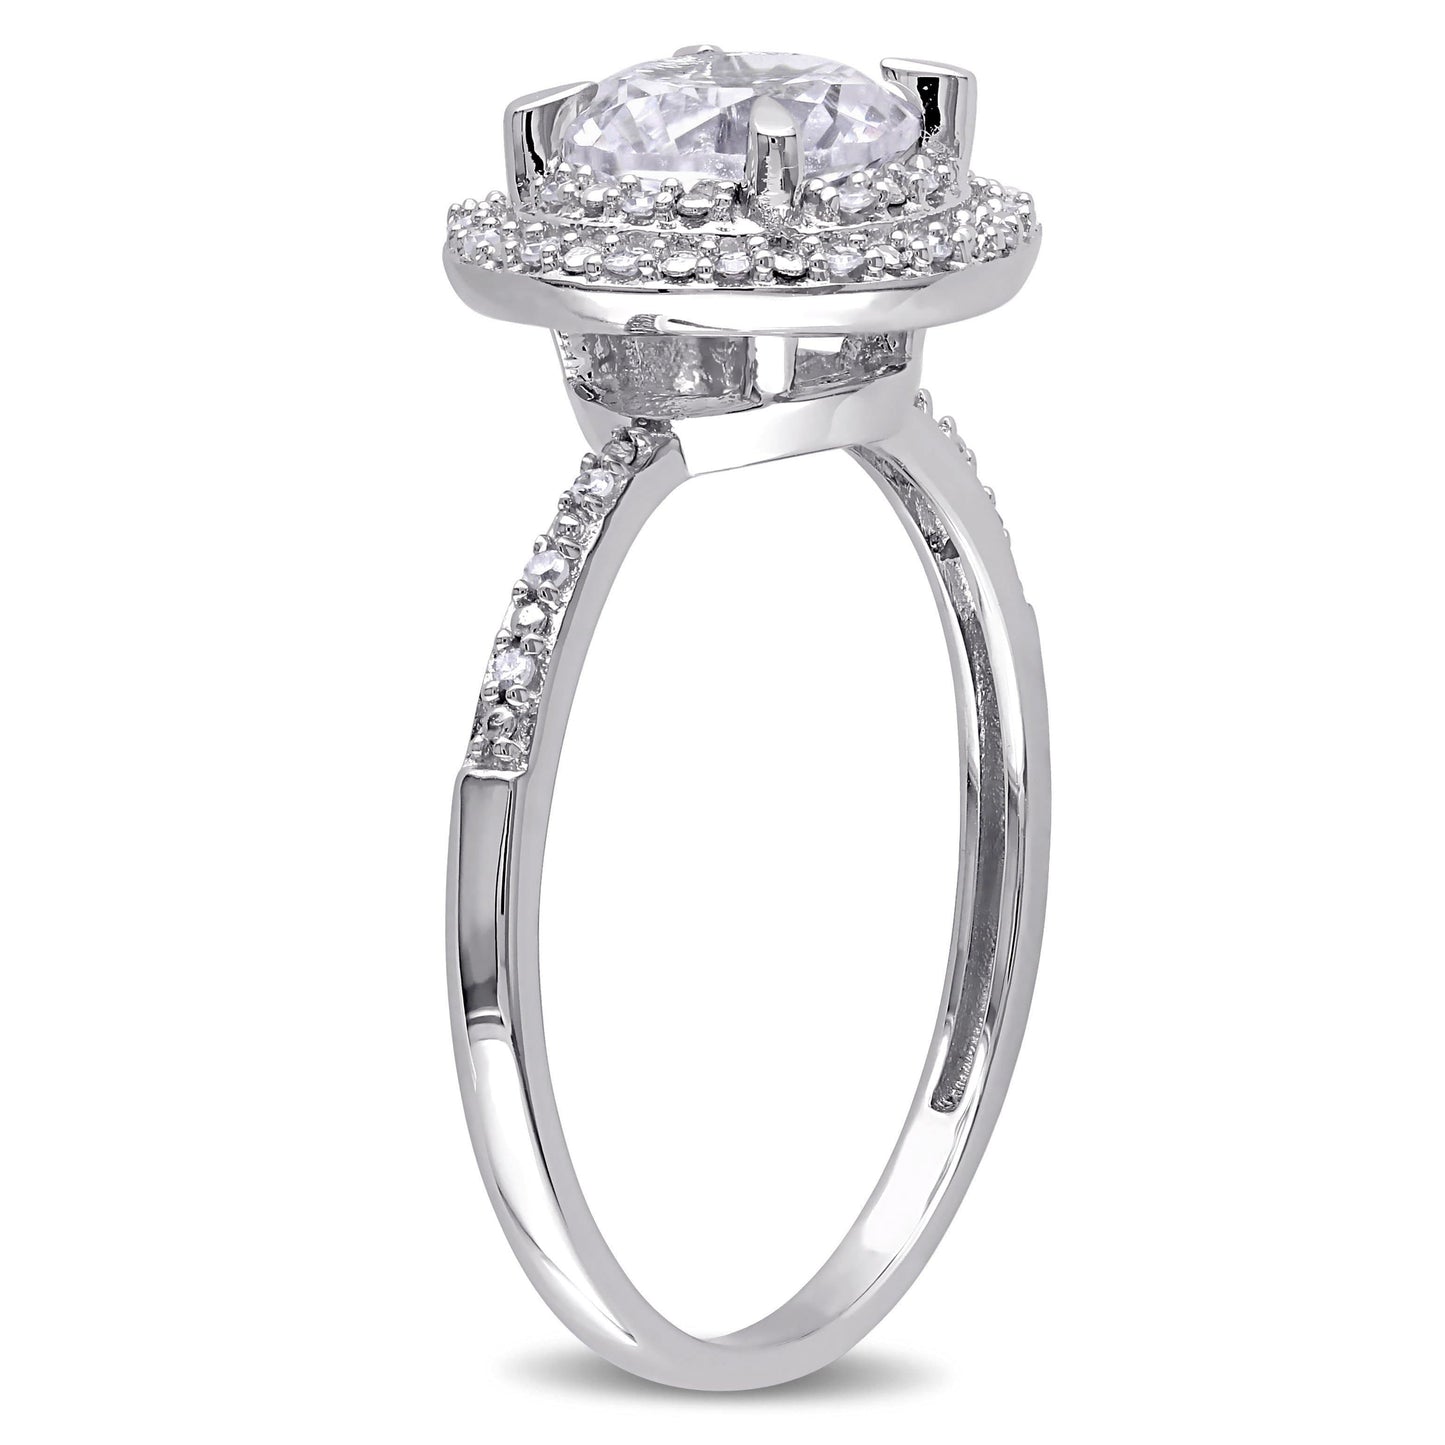 White Sapphire & Diamond Ring